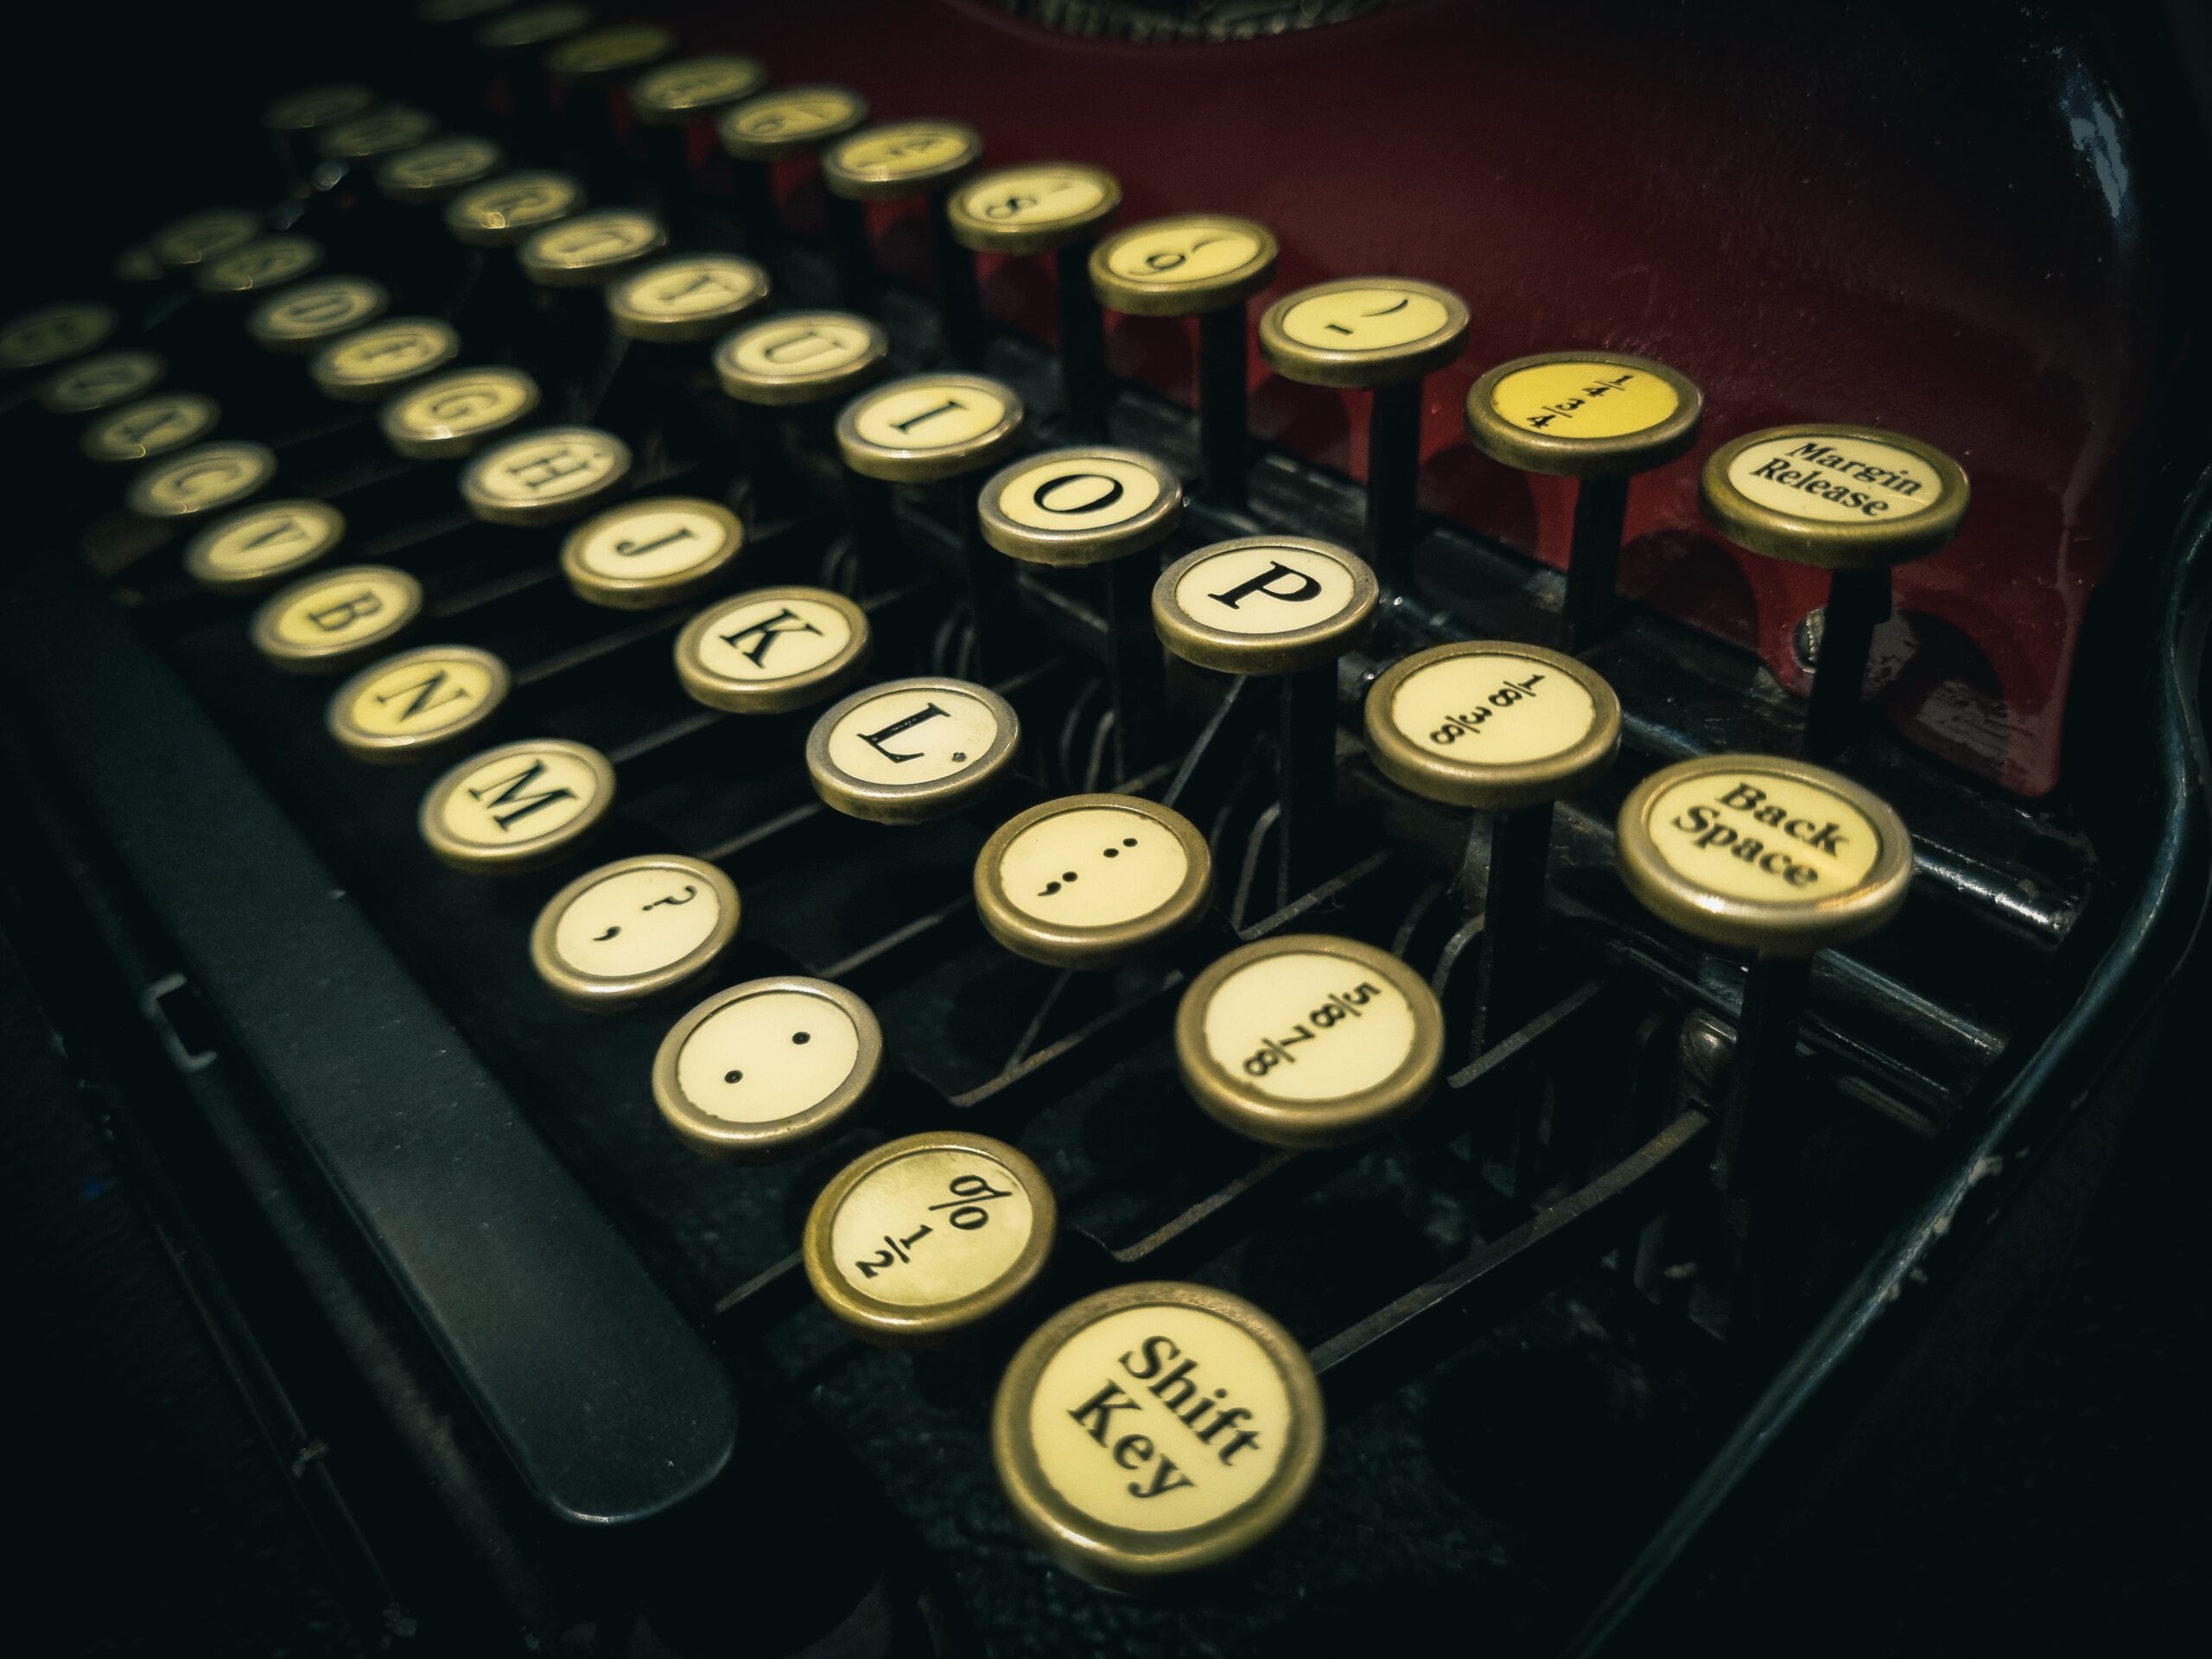 An old fashioned typewriter